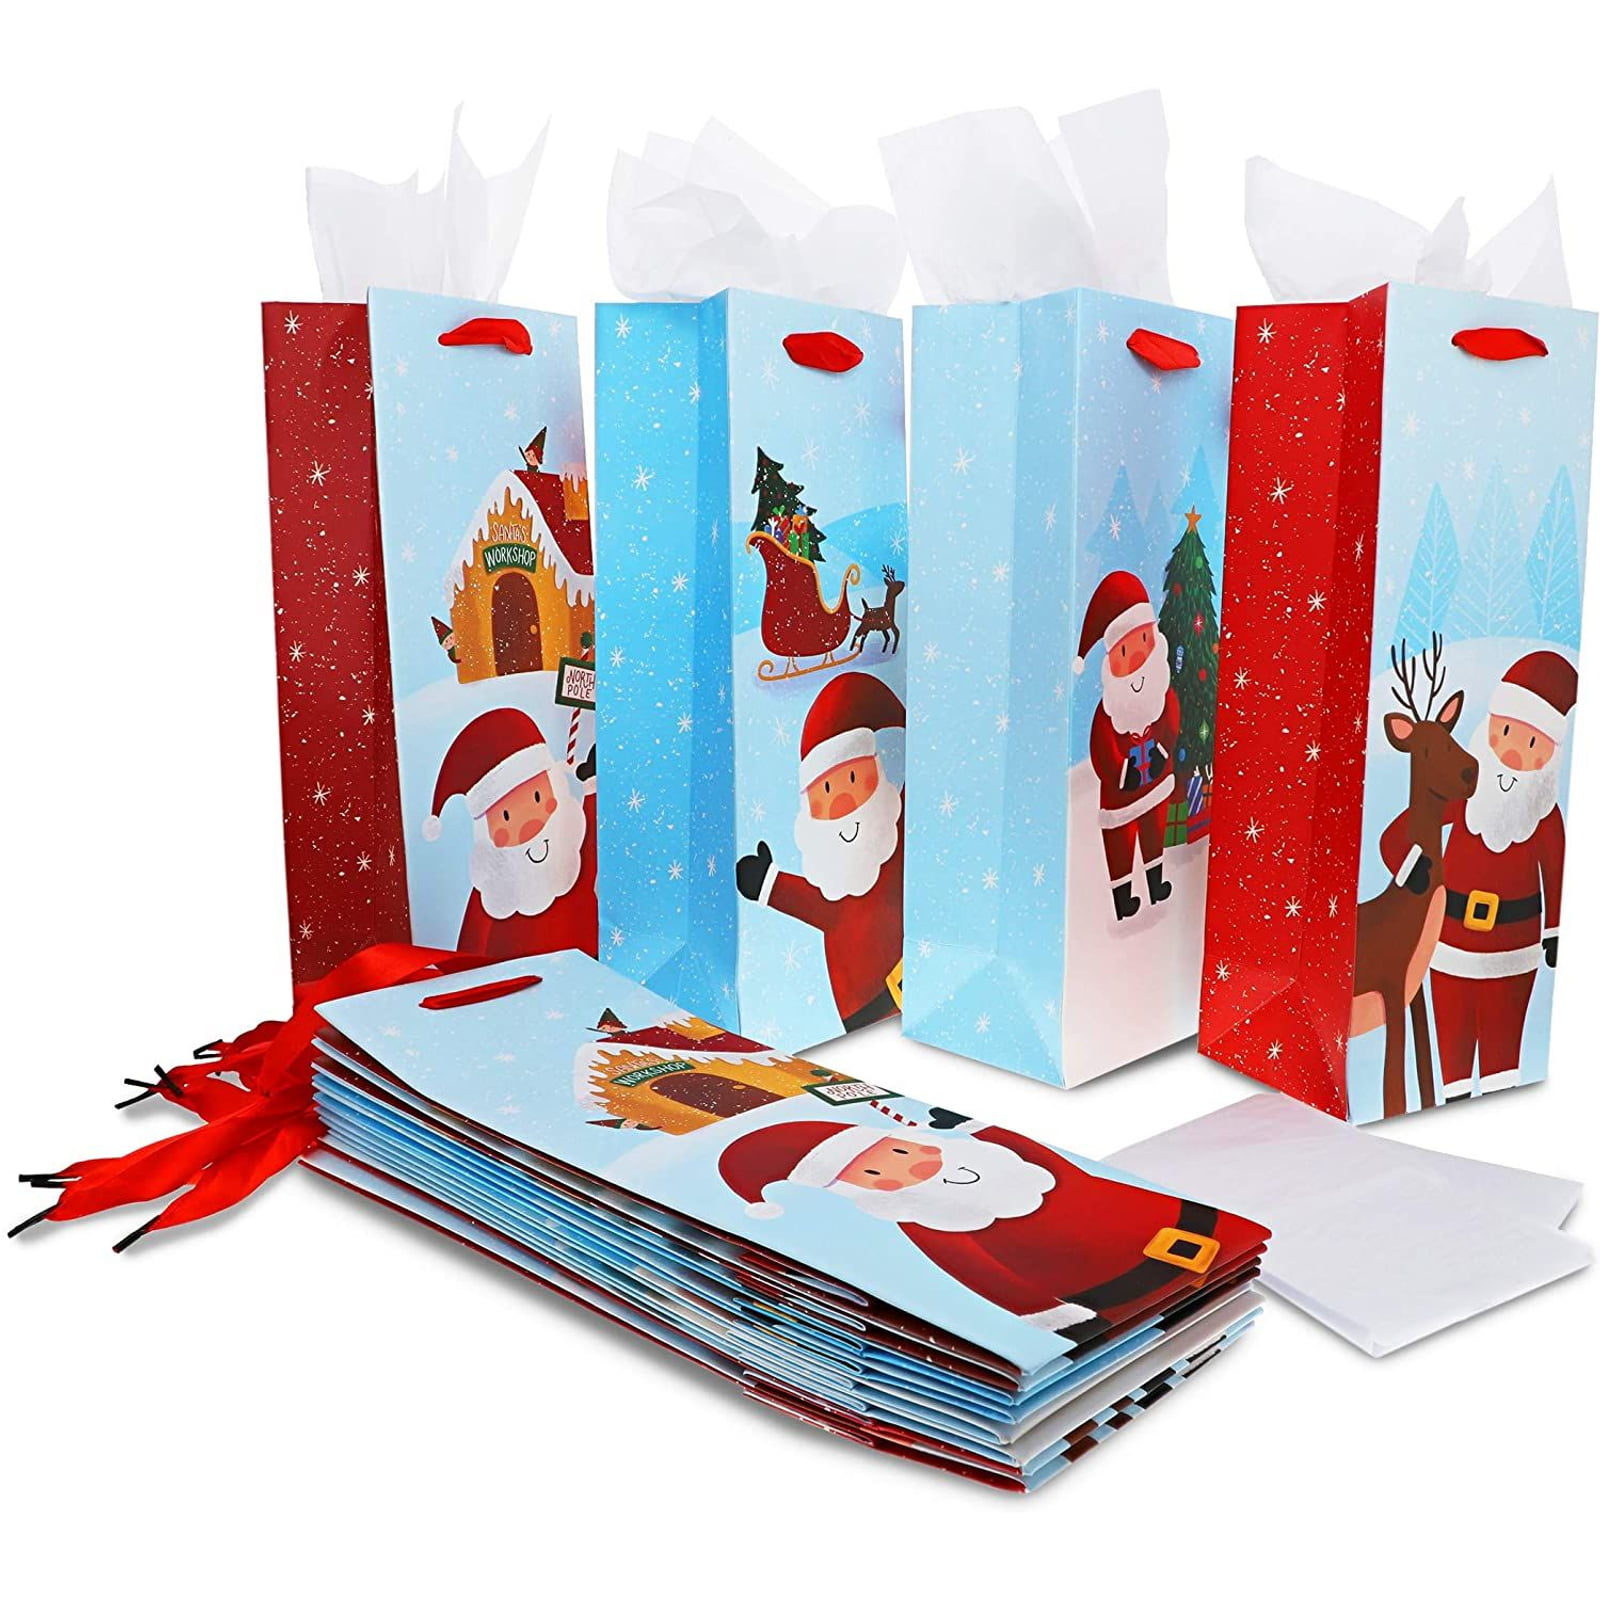 Christmas wine bag,Mistletoe burlap bag,Holiday themed bottle bag,Burlap gift bag,Wine box,Wine bottle case,Holiday wine bag,Christmas gift